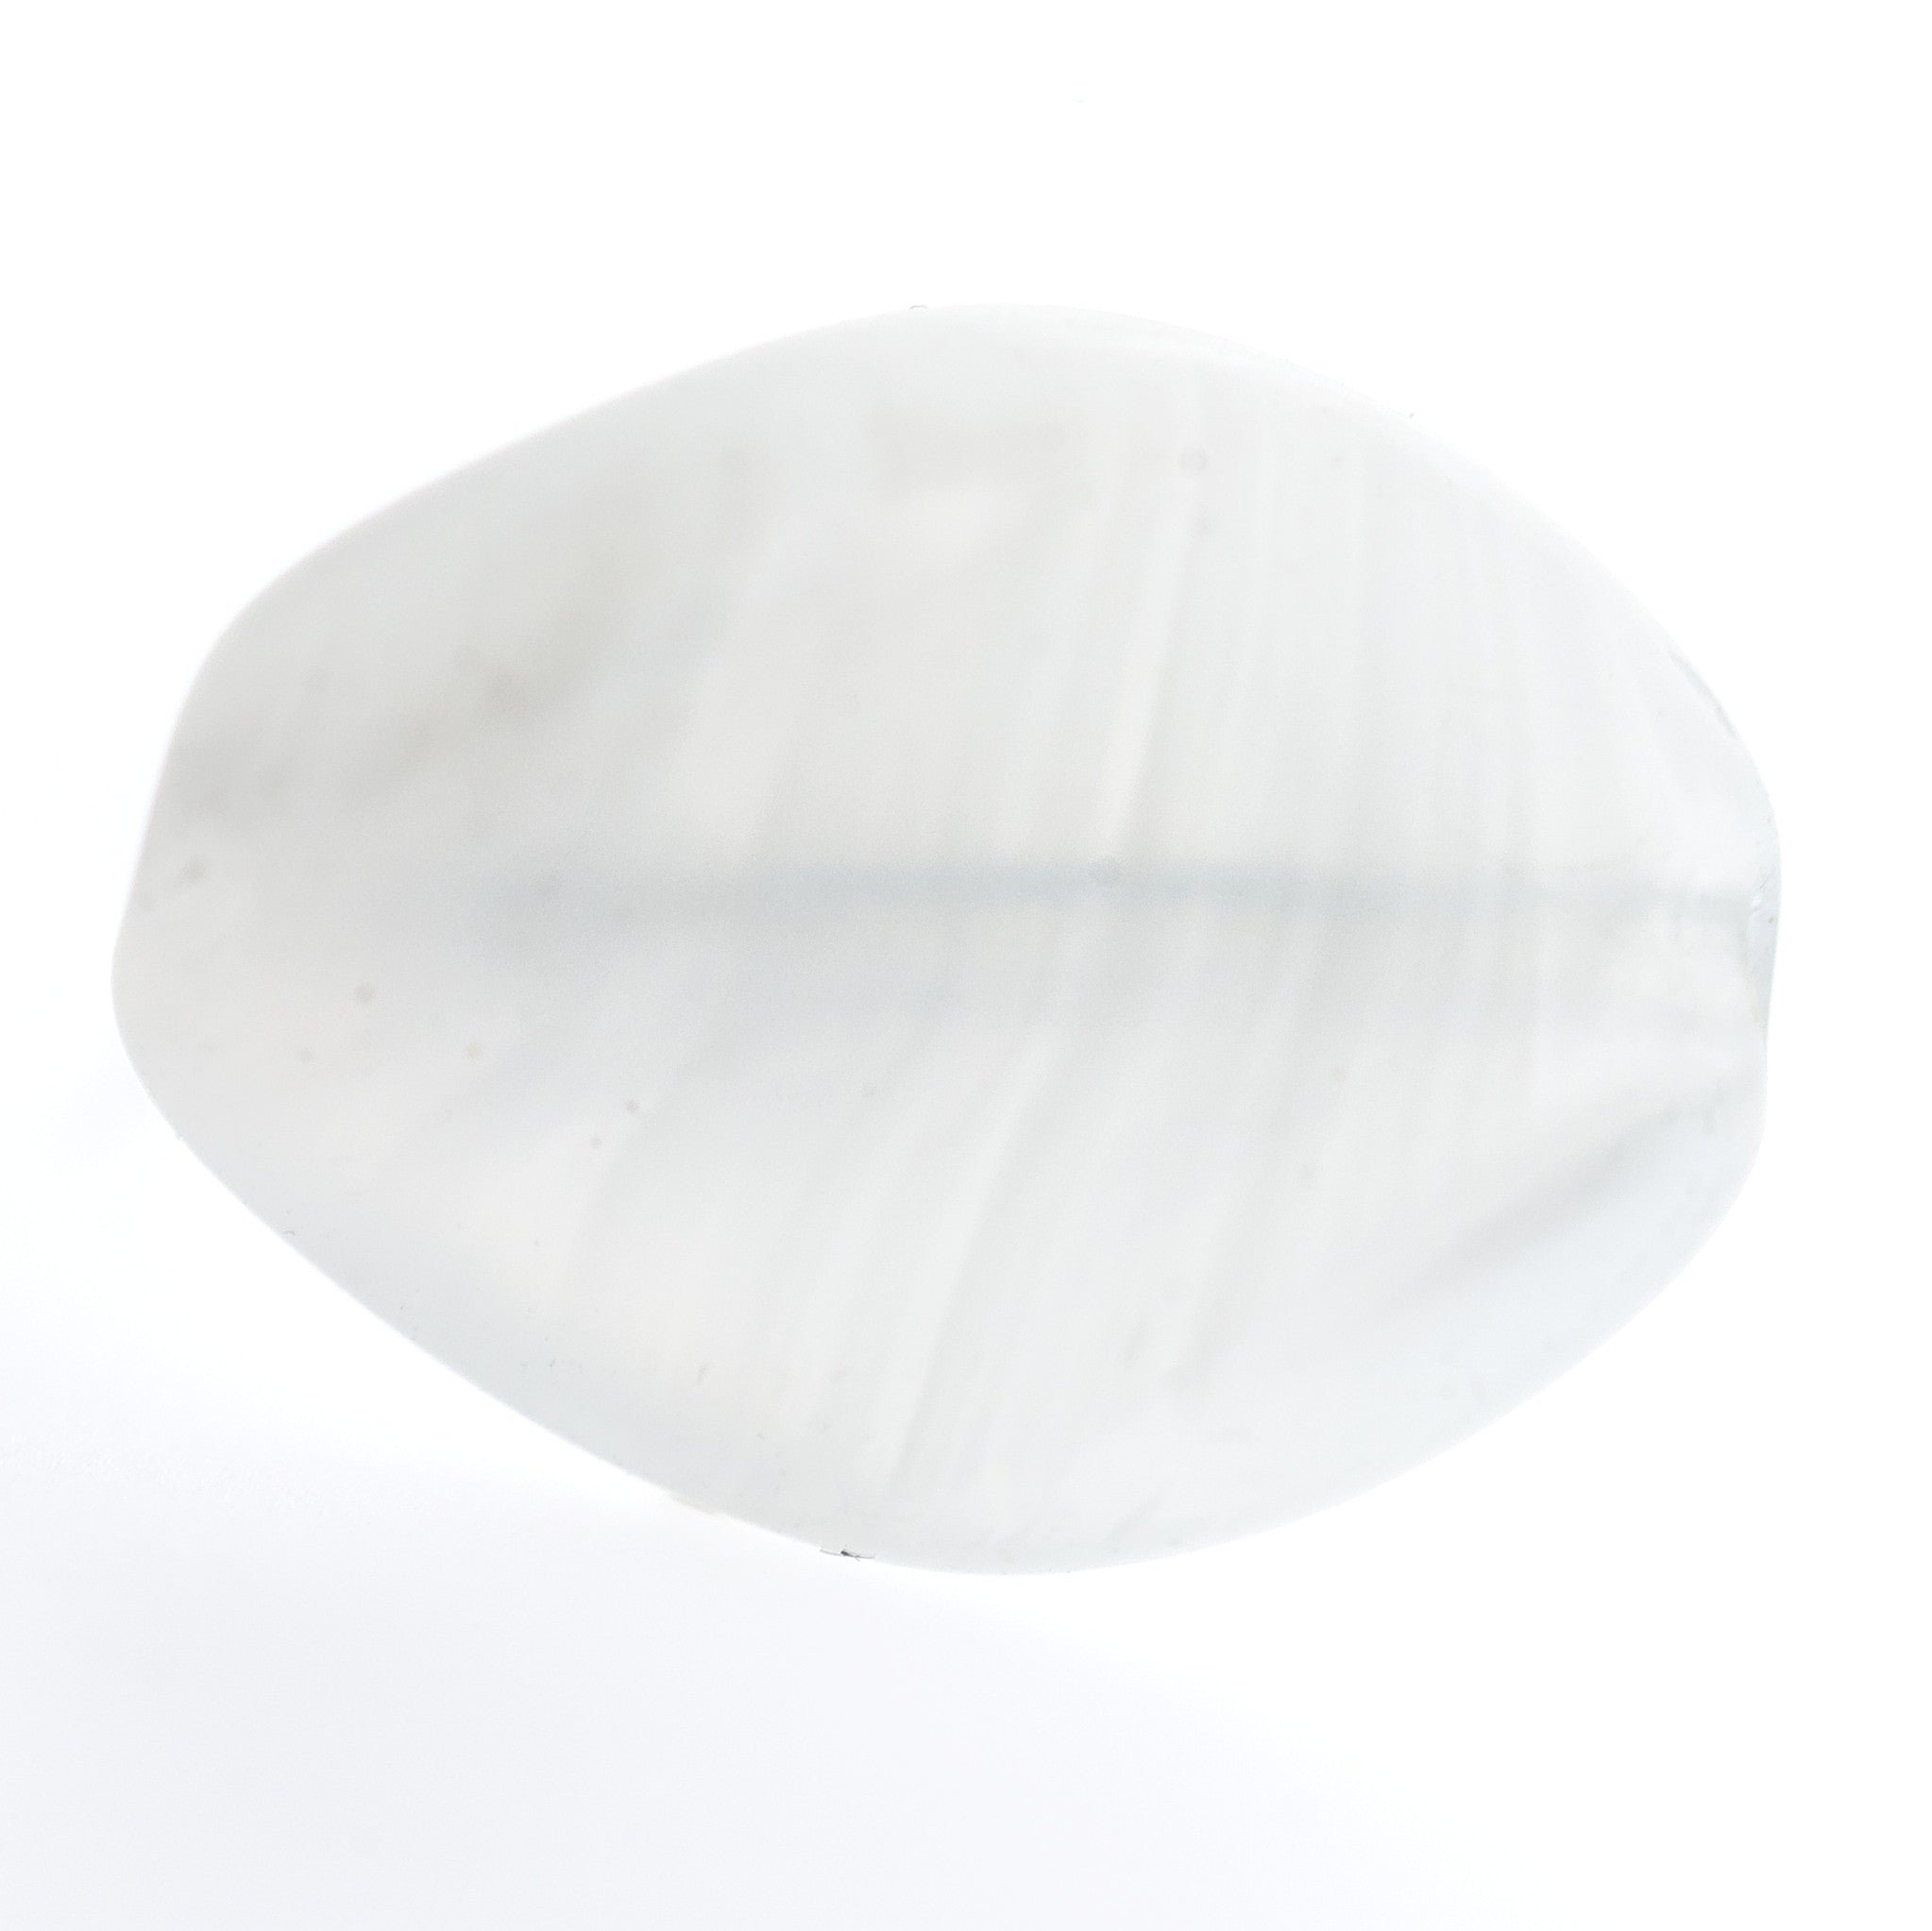 14X10MM White Quartz Glass Oval Bead (36 pieces)